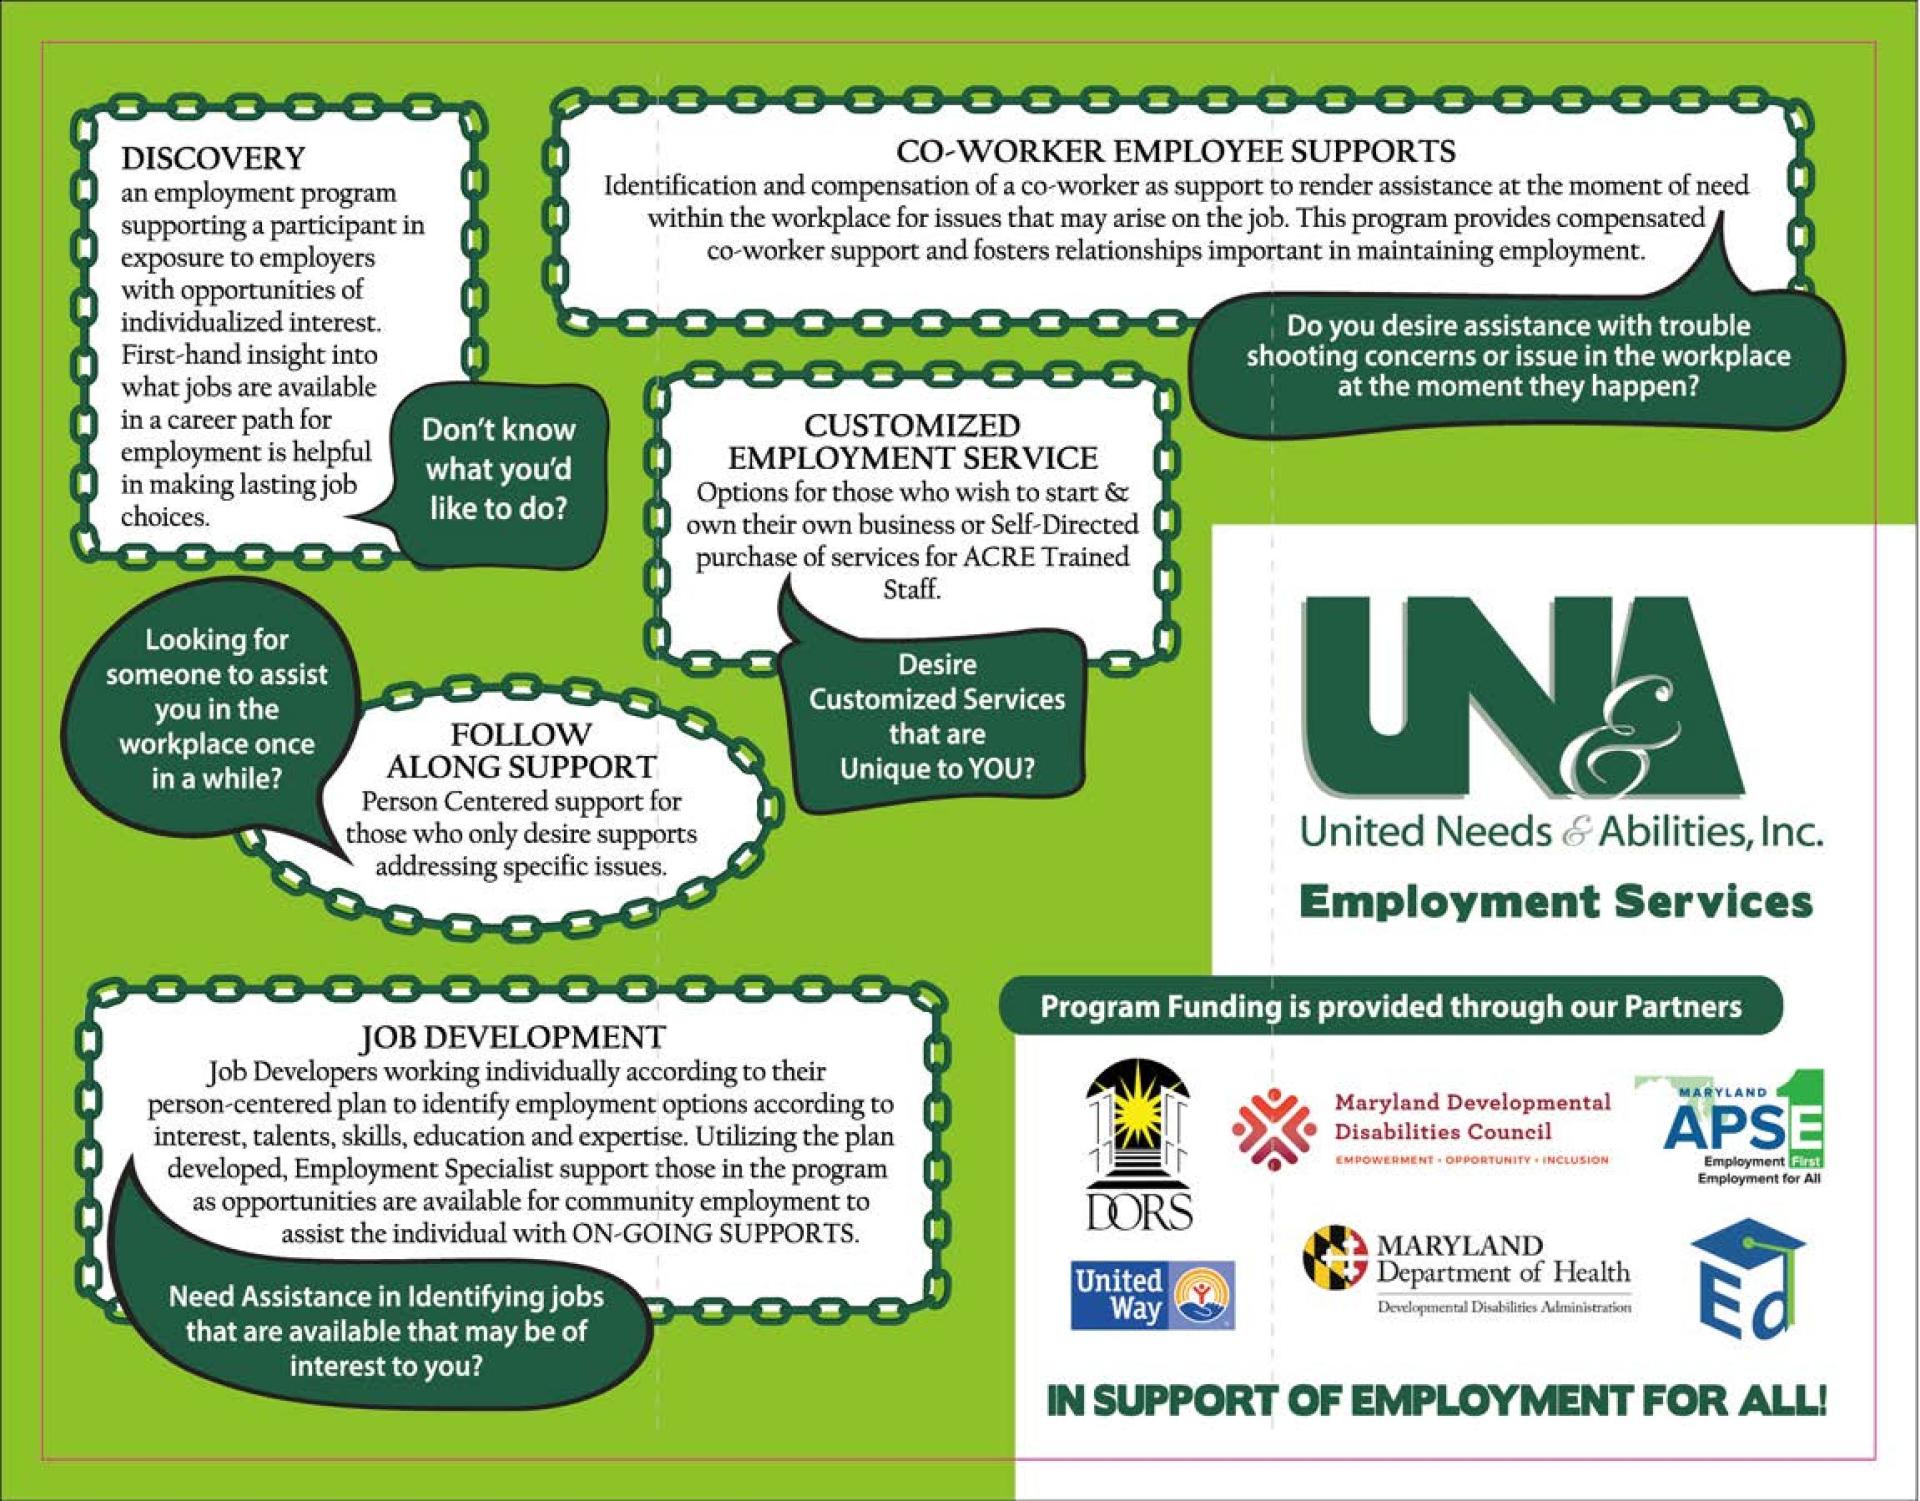 UNA's Employment Services Page 02